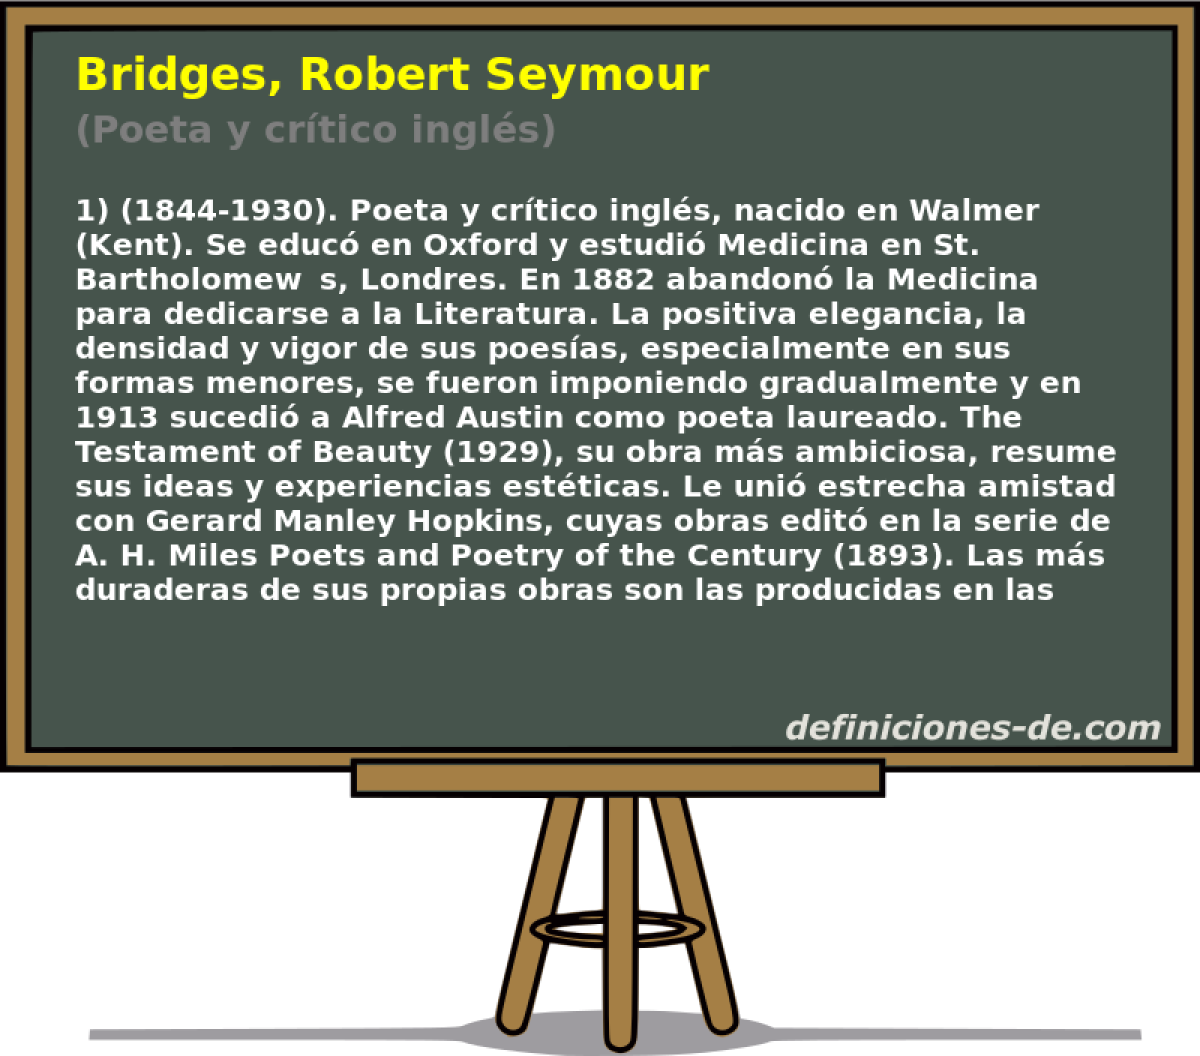 Bridges, Robert Seymour (Poeta y crtico ingls)